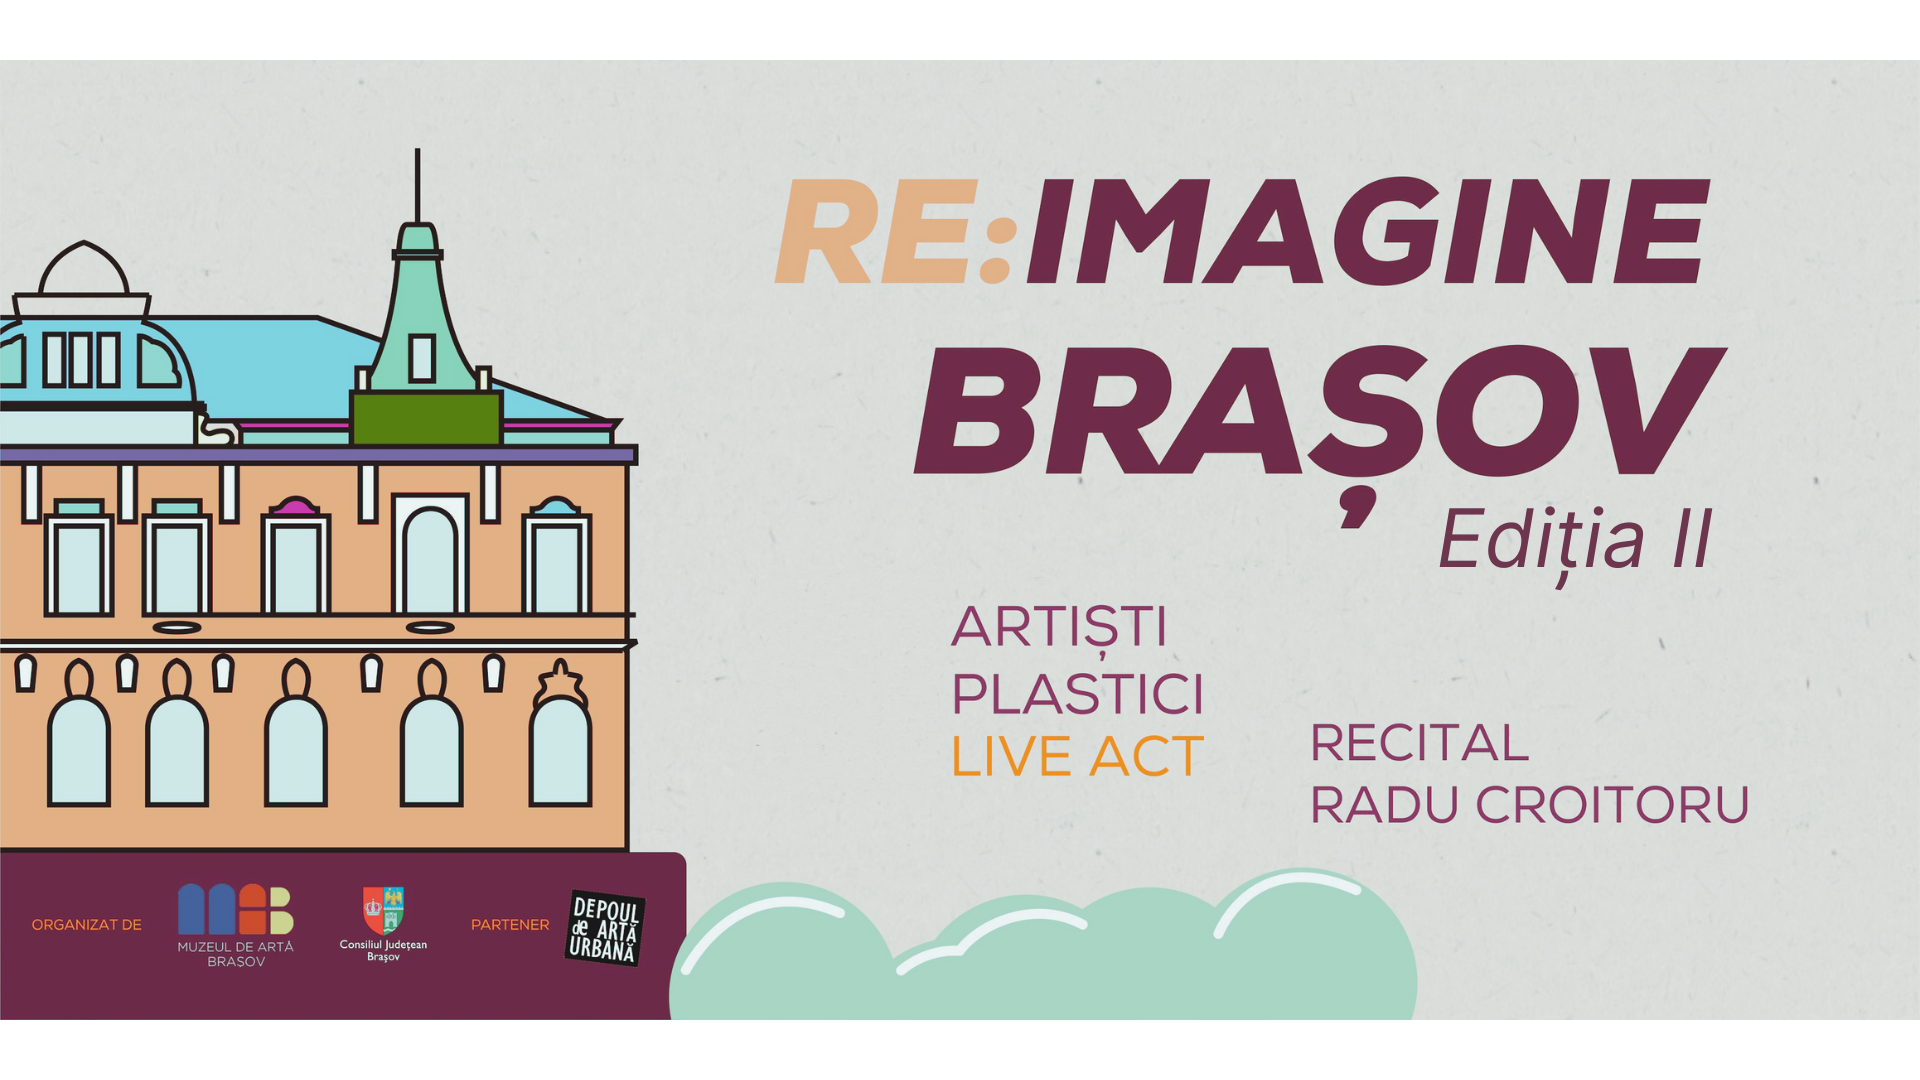 Re:Imagine Brașov, Ediția II | Live act & Recital Radu Croitoru